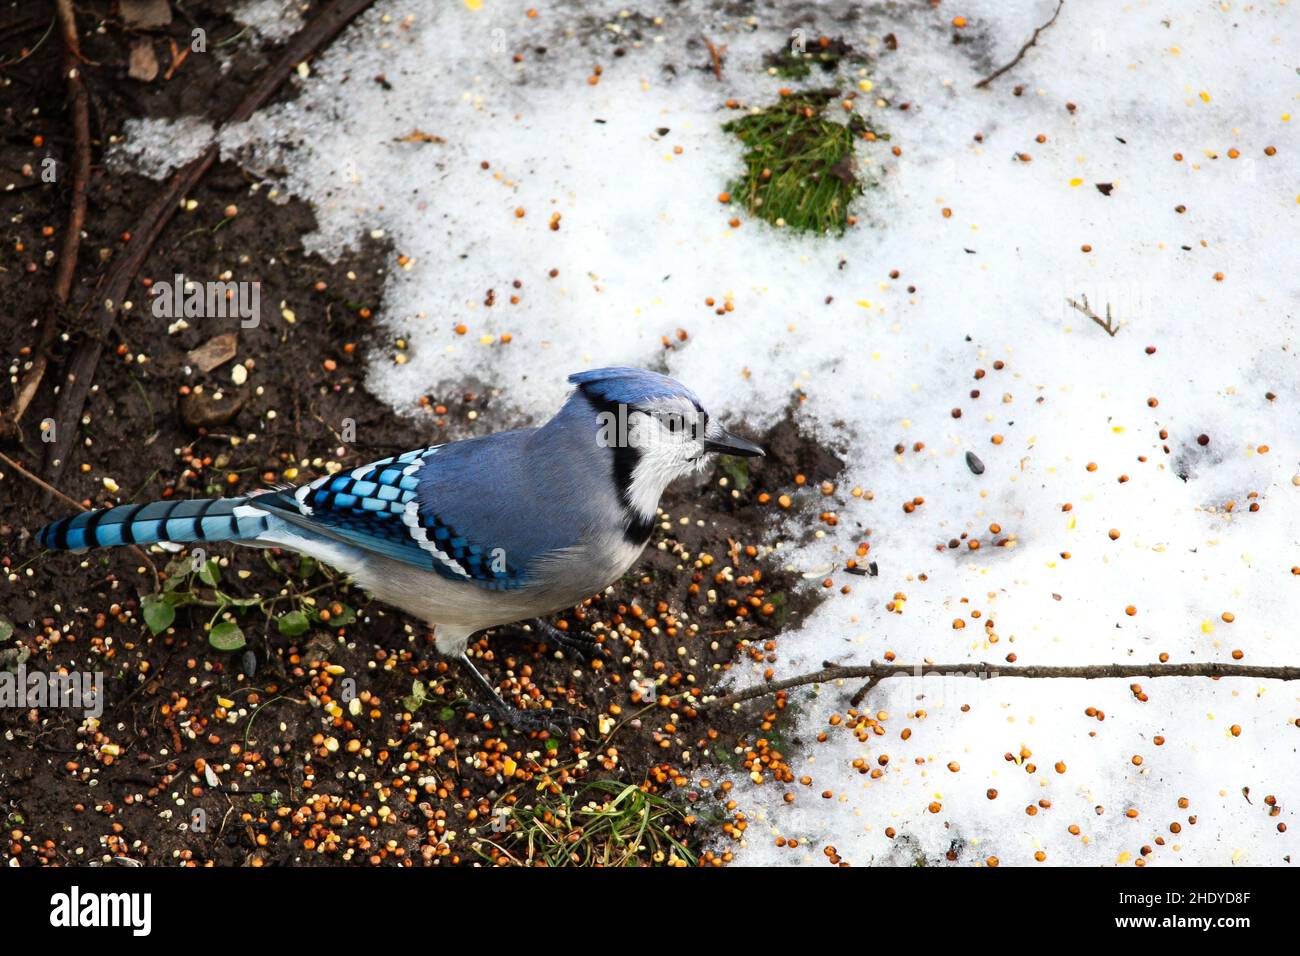 Blue Jay bird on ground with bird food and snow Stock Photo